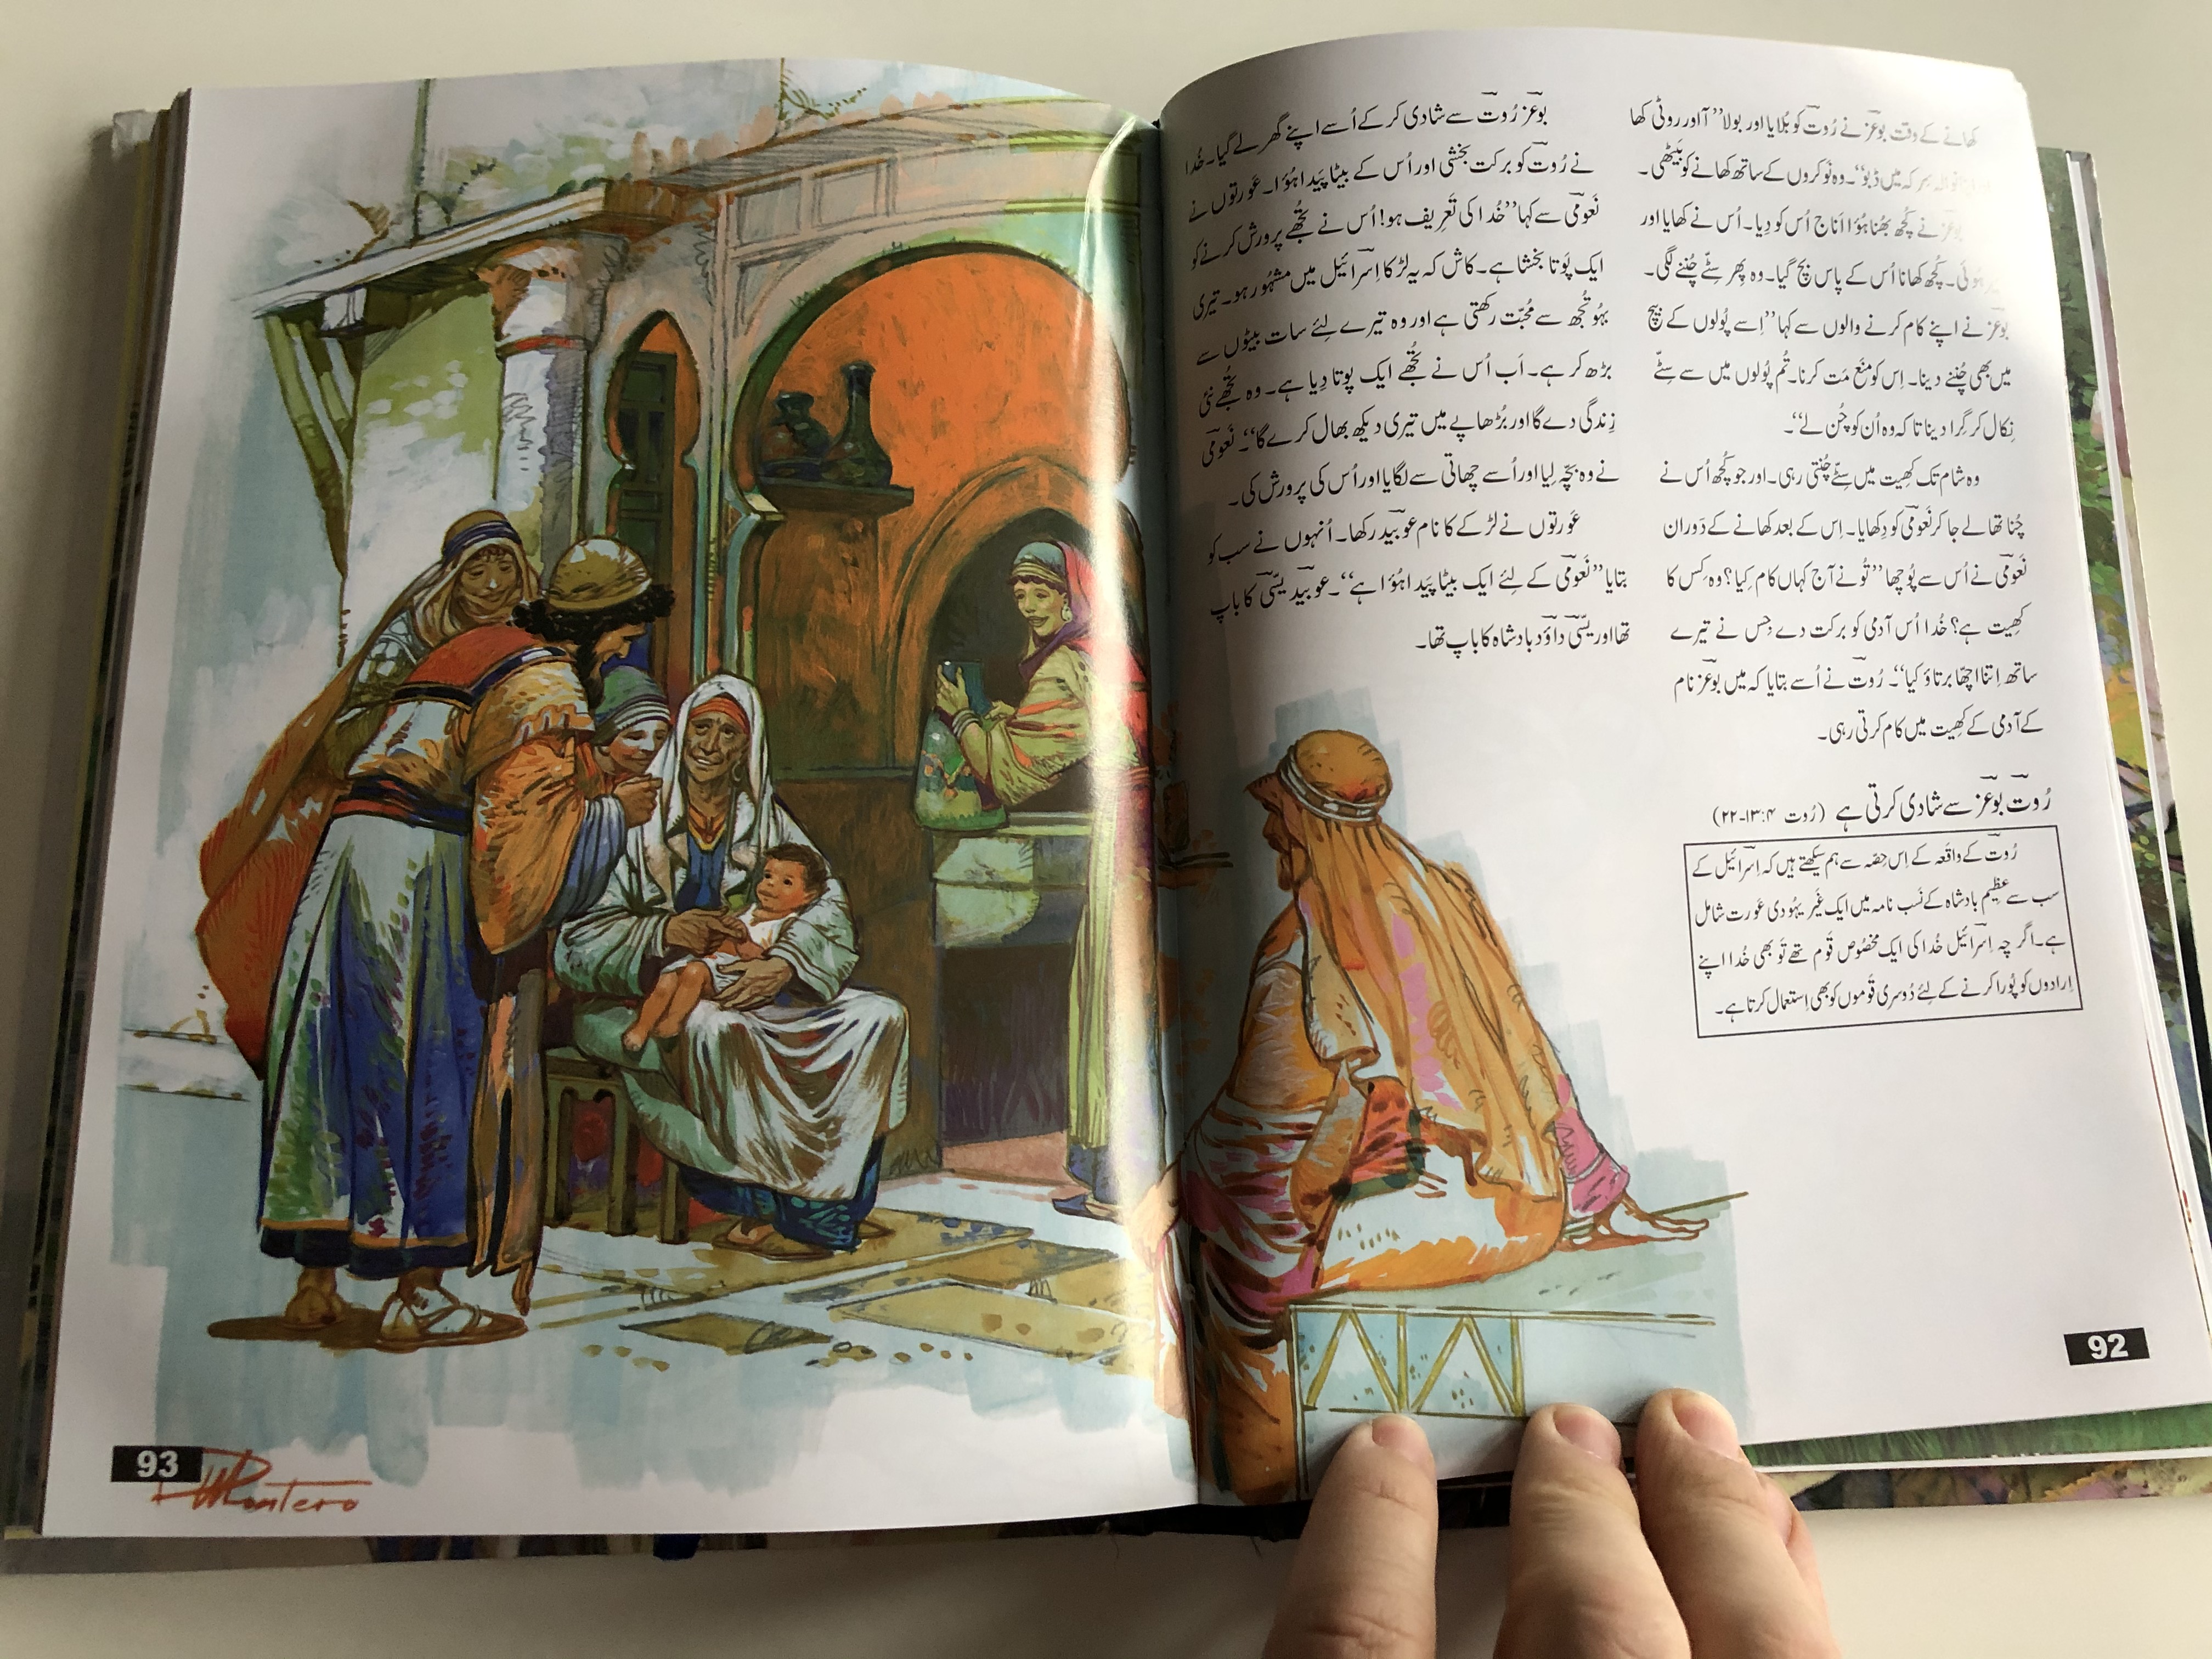 -the-children-s-bible-in-urdu-persian-pakistan-bible-society-2019-illustrated-by-jose-montero-6-.jpg